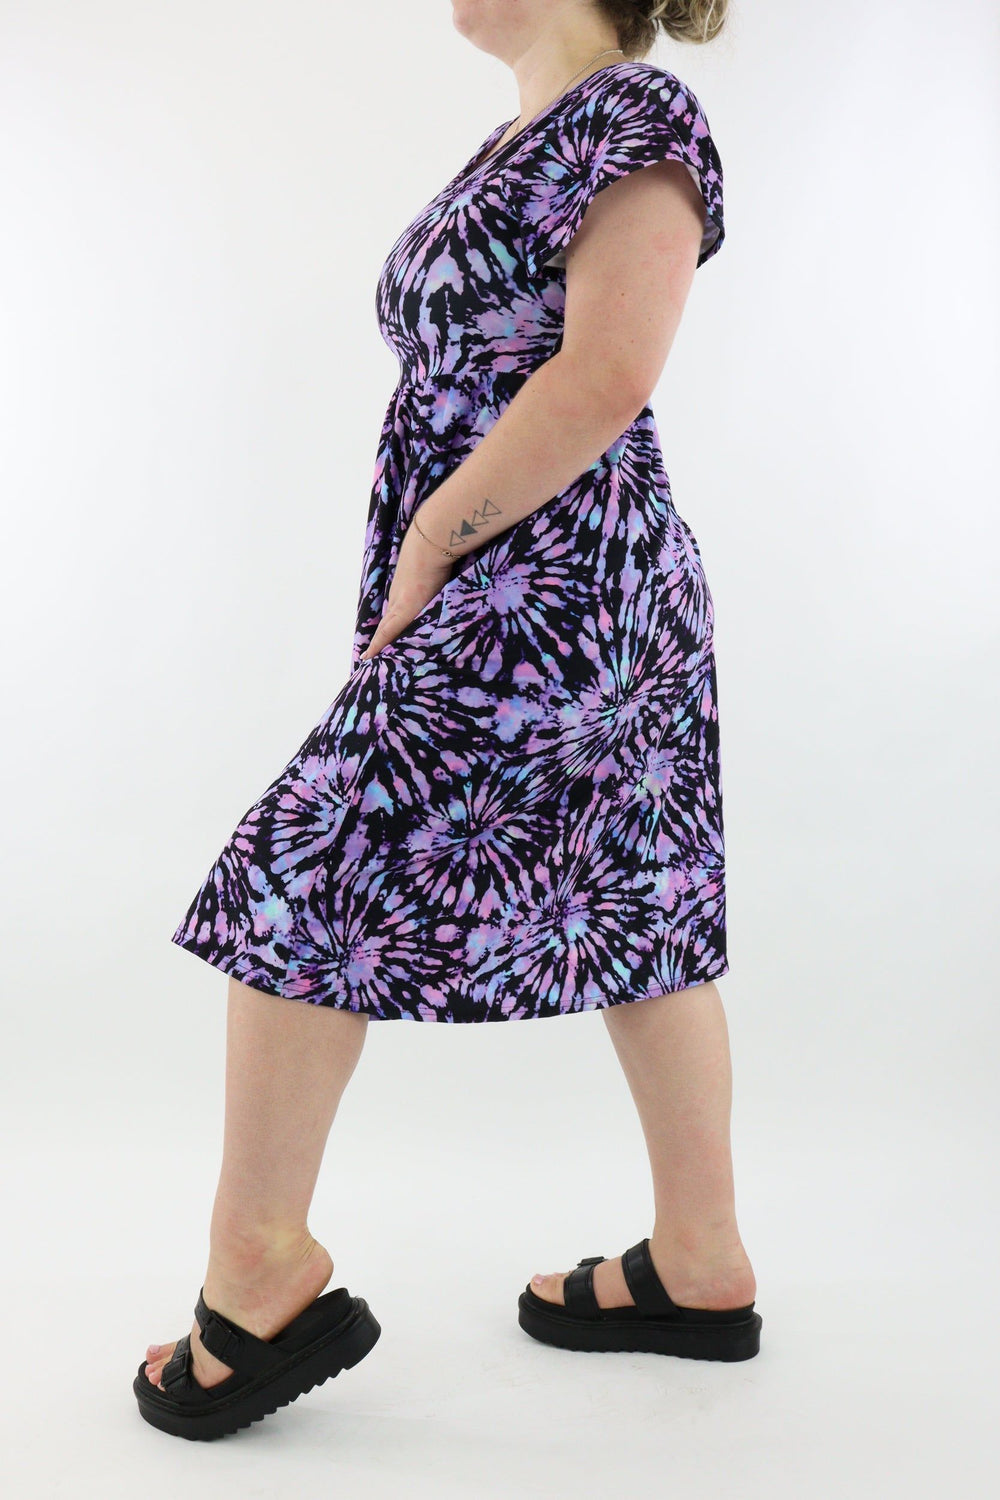 Iridescent Purple Tie Dye - A-Line Dress - Midi Length - Side Pockets - Pawlie